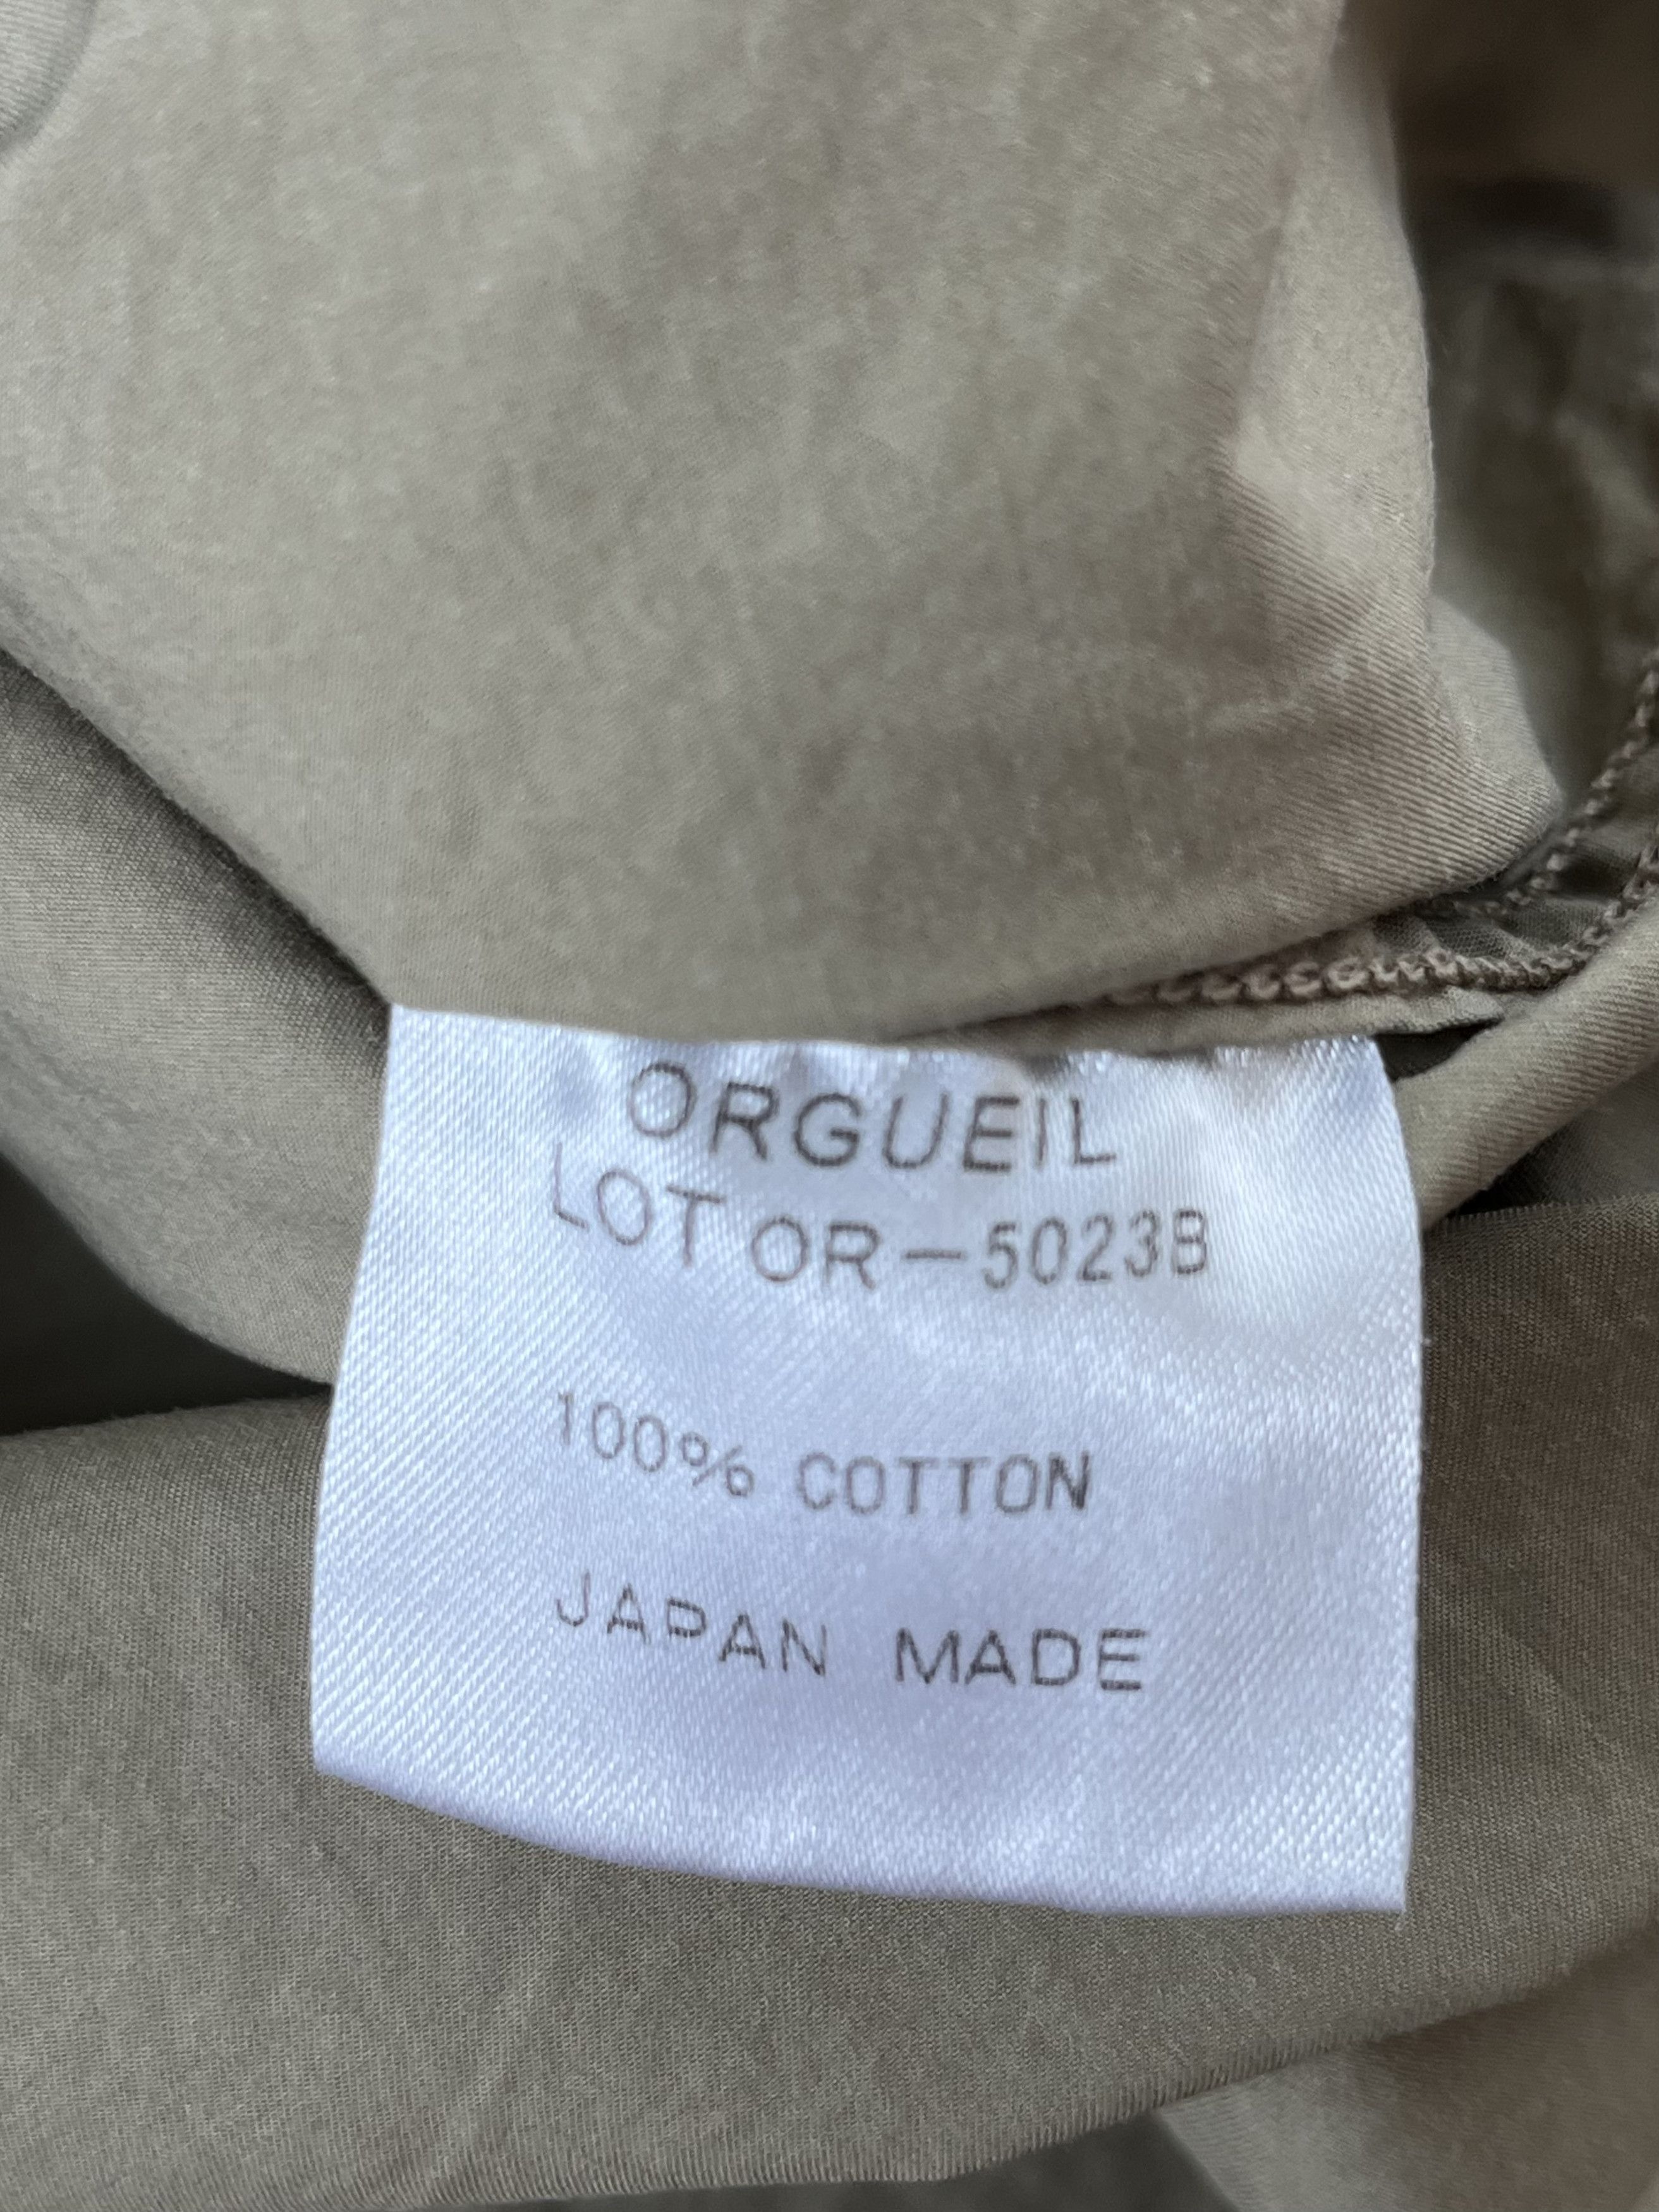 Orgueil Orgueil Japan Made by Studio Dartisan Classic Work Shirt S Size US S / EU 44-46 / 1 - 20 Thumbnail